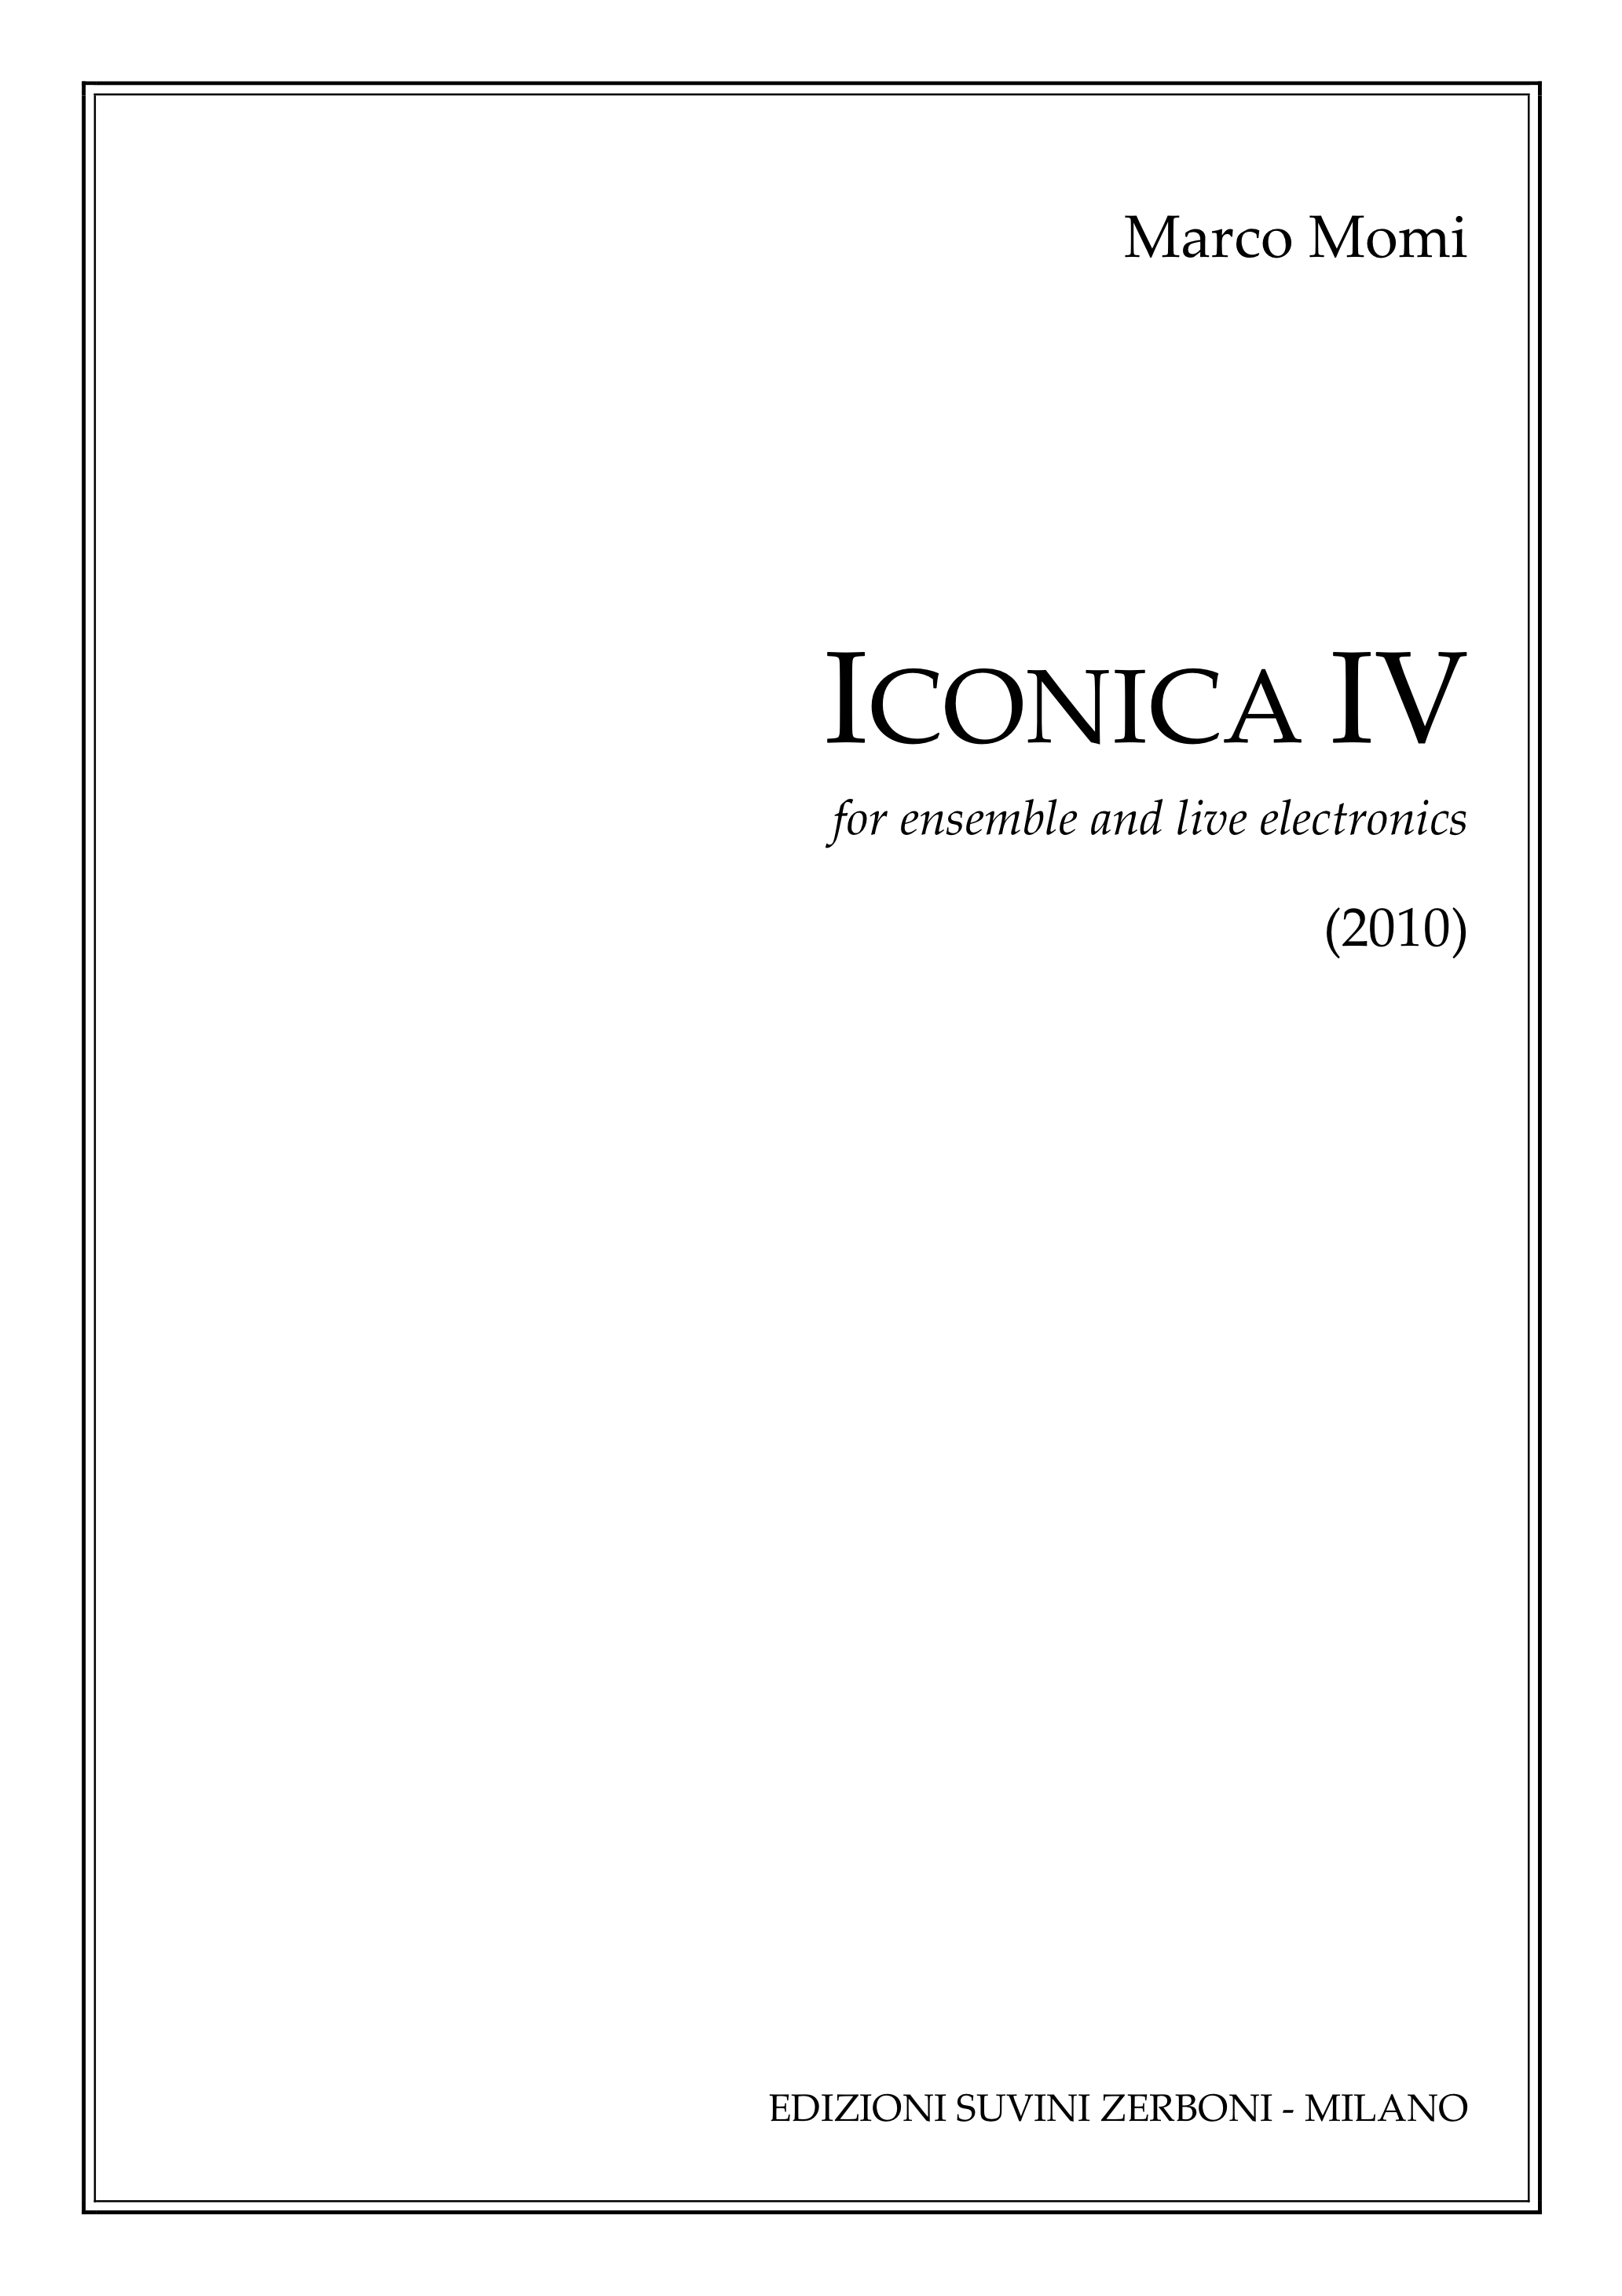 ICONICA IV_Momi 1